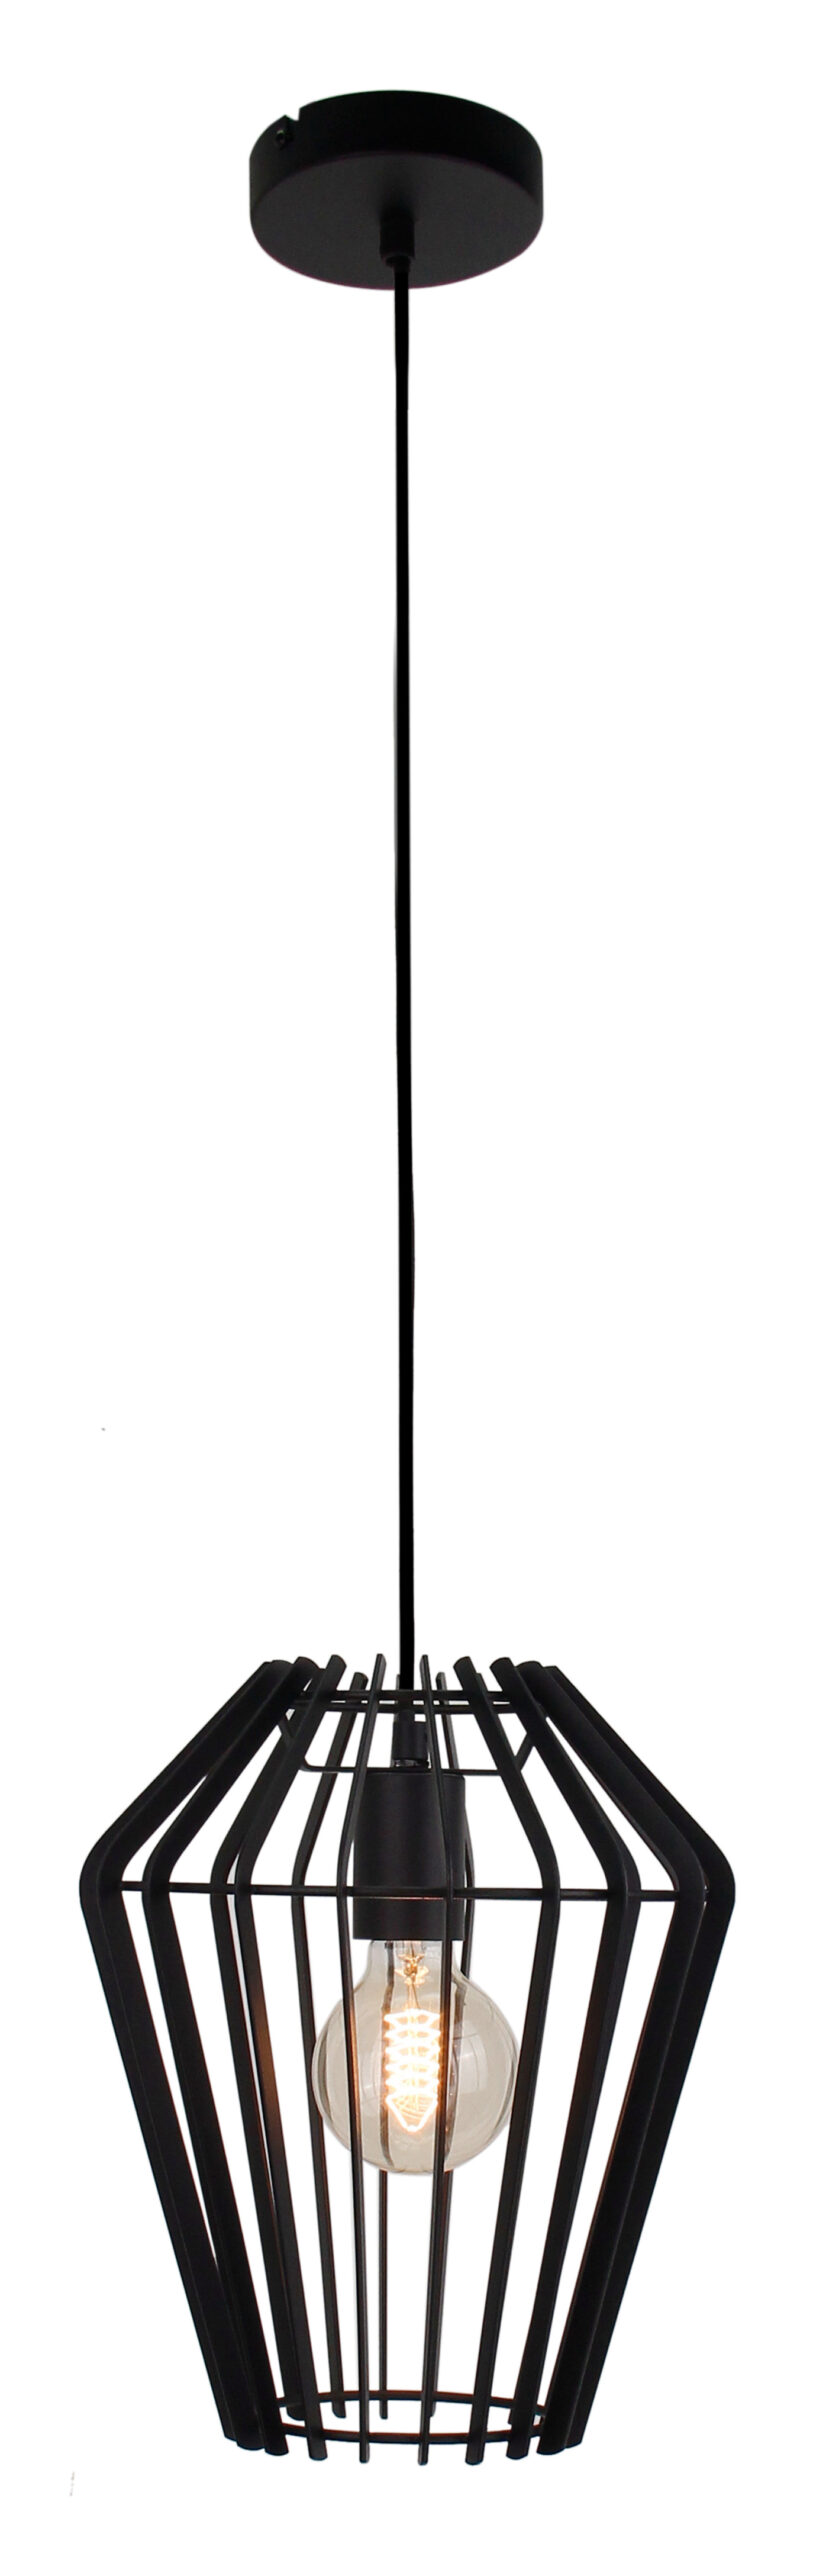 maagd club Condenseren Chericoni Tavola hanglamp - 1 lichts - Ø25cm - E27 - Zwart hotel chique •  BASICLAMP